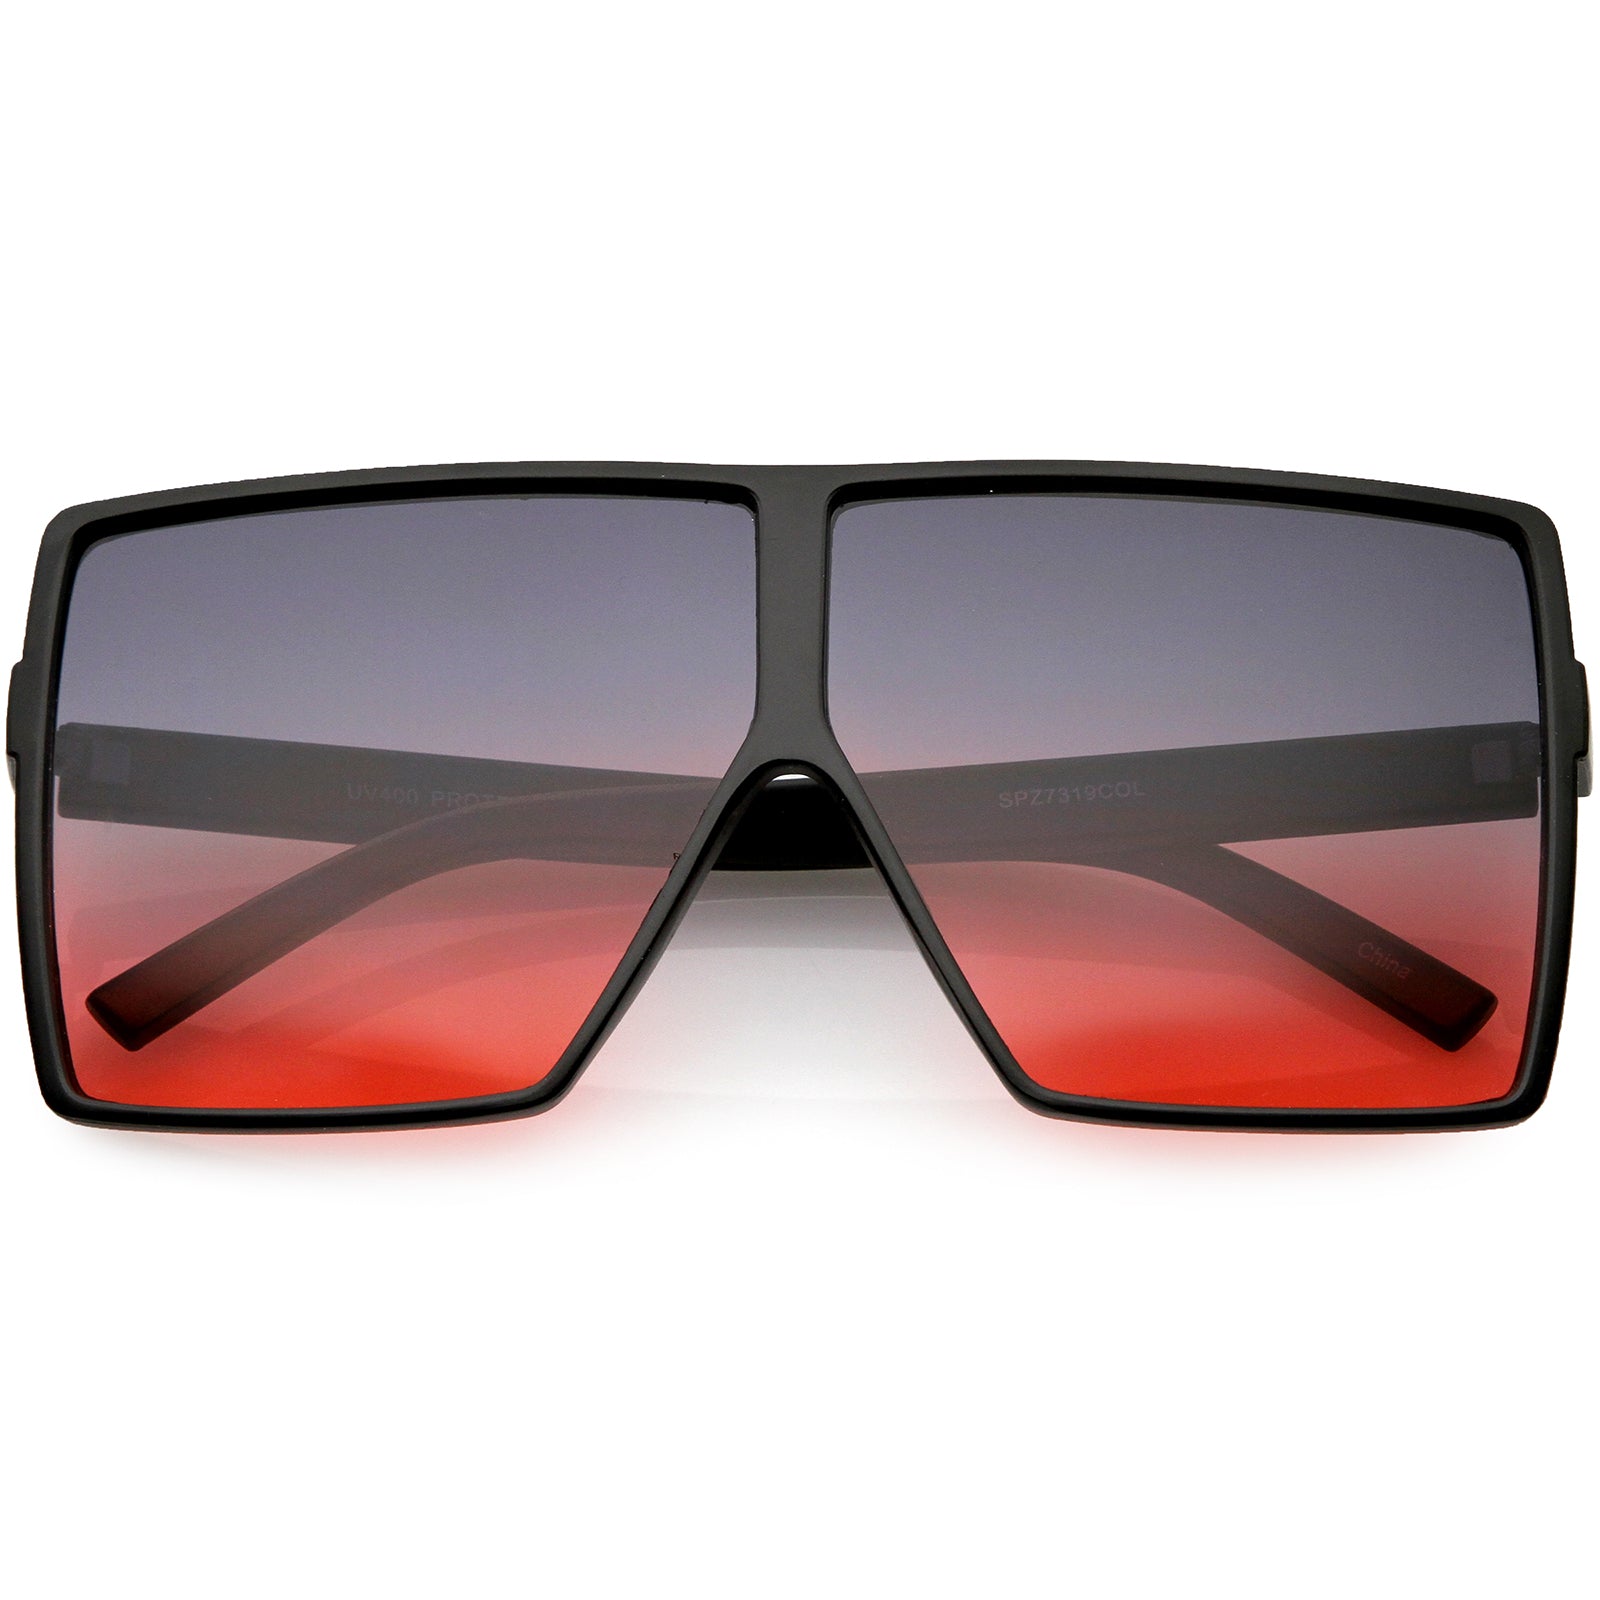 Big Large Oversize Square Sunglasses Flat Top Two Tone Lens 70mm - sunglass .la